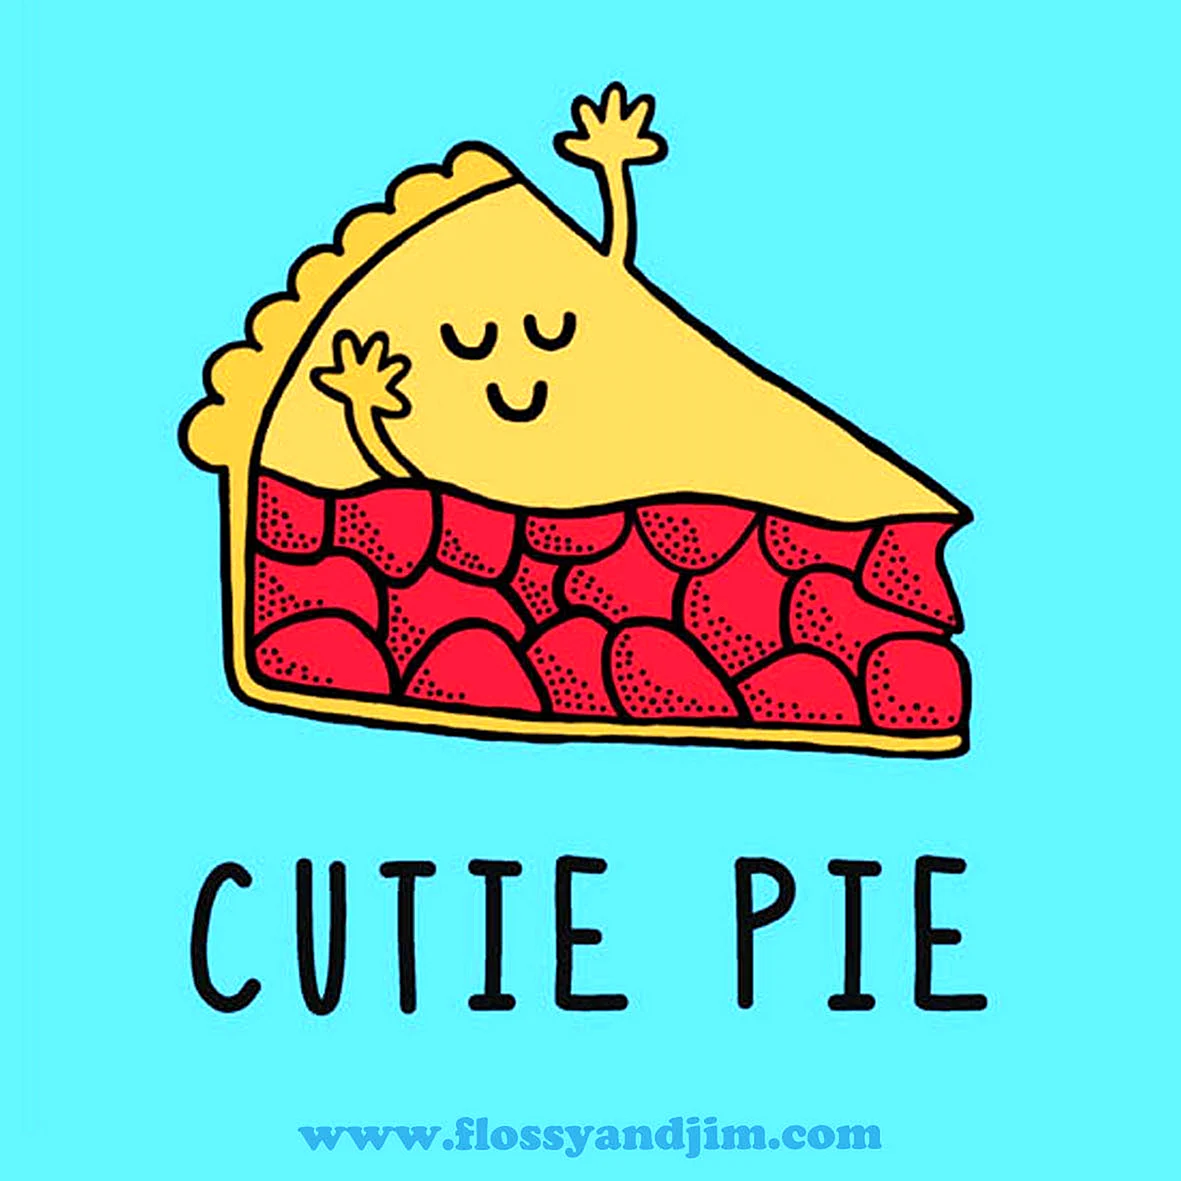 Cutie Pie Wallpaper